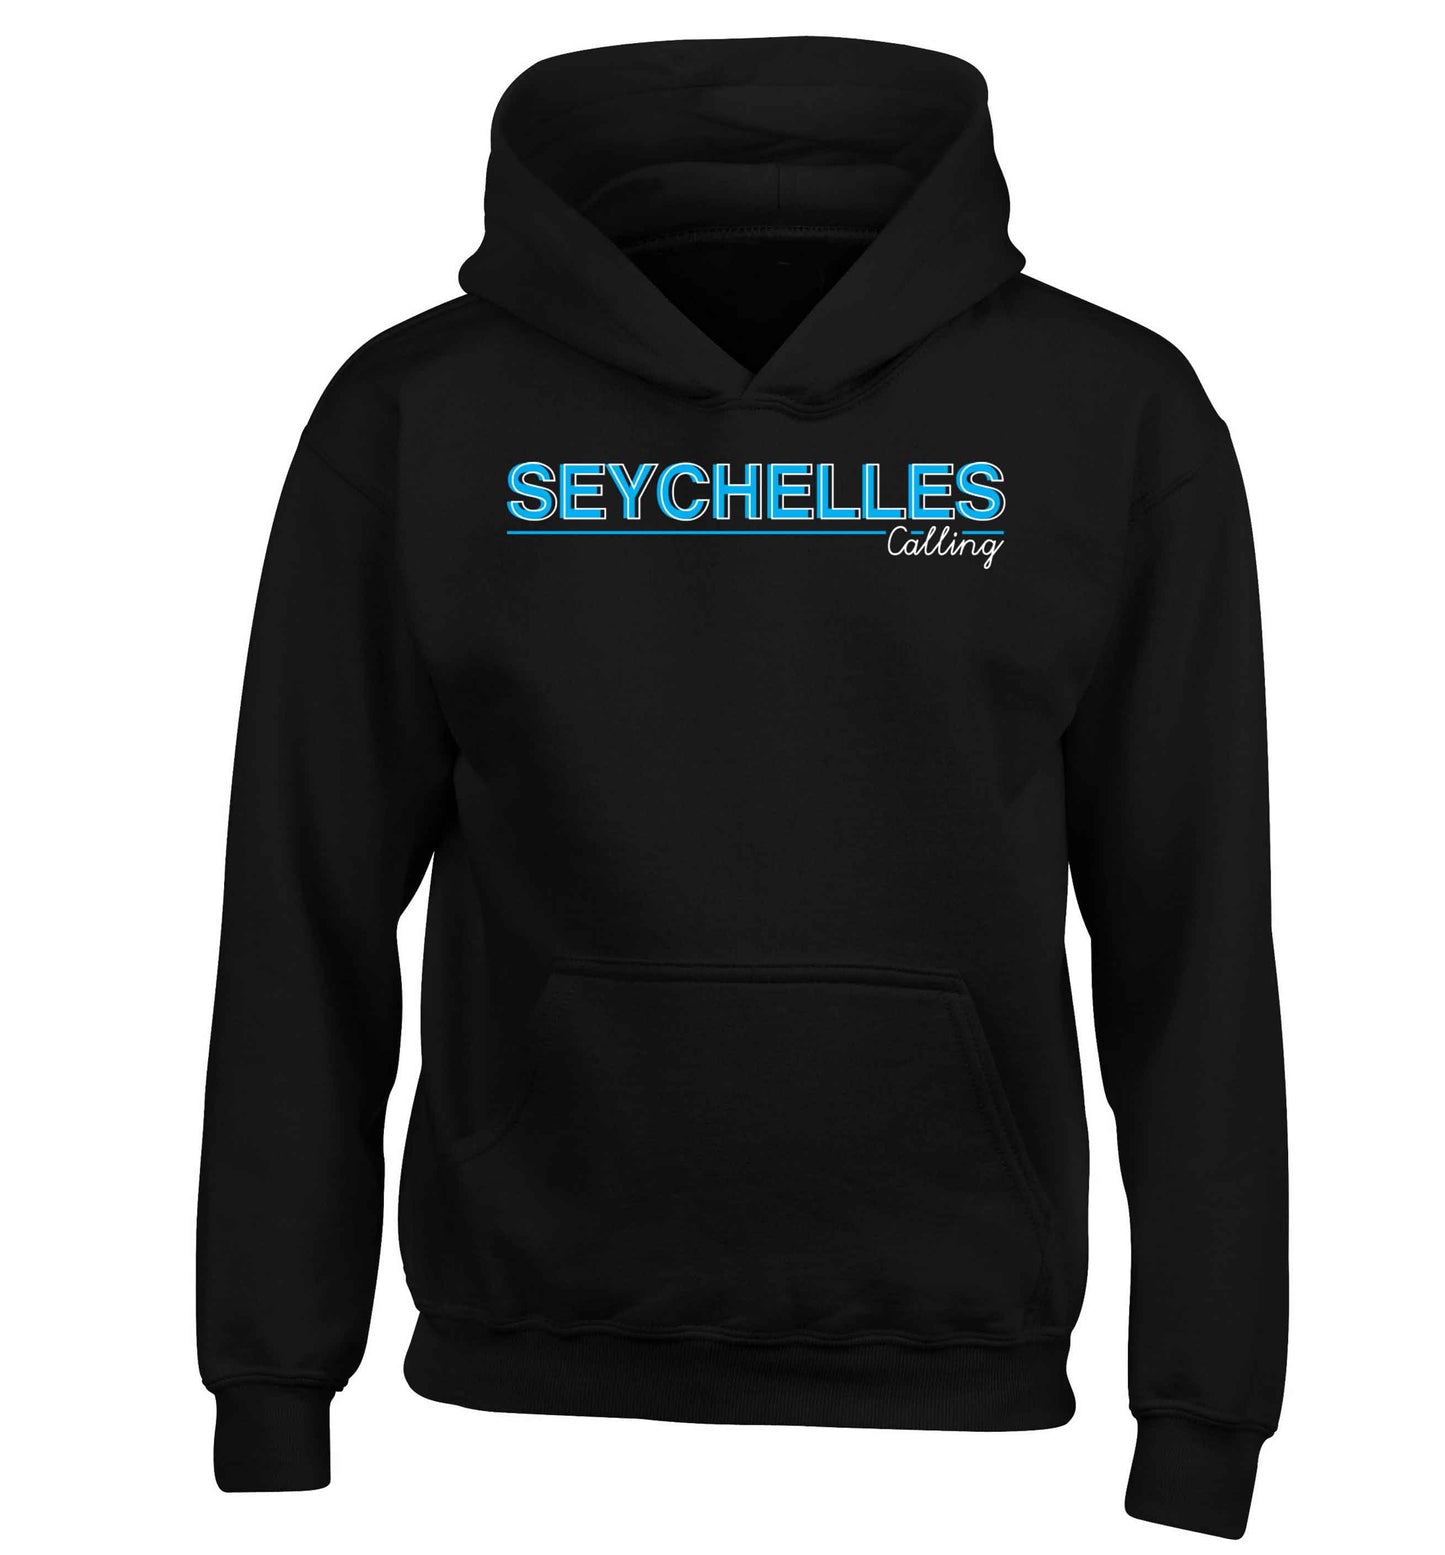 Seychelles calling children's black hoodie 12-13 Years